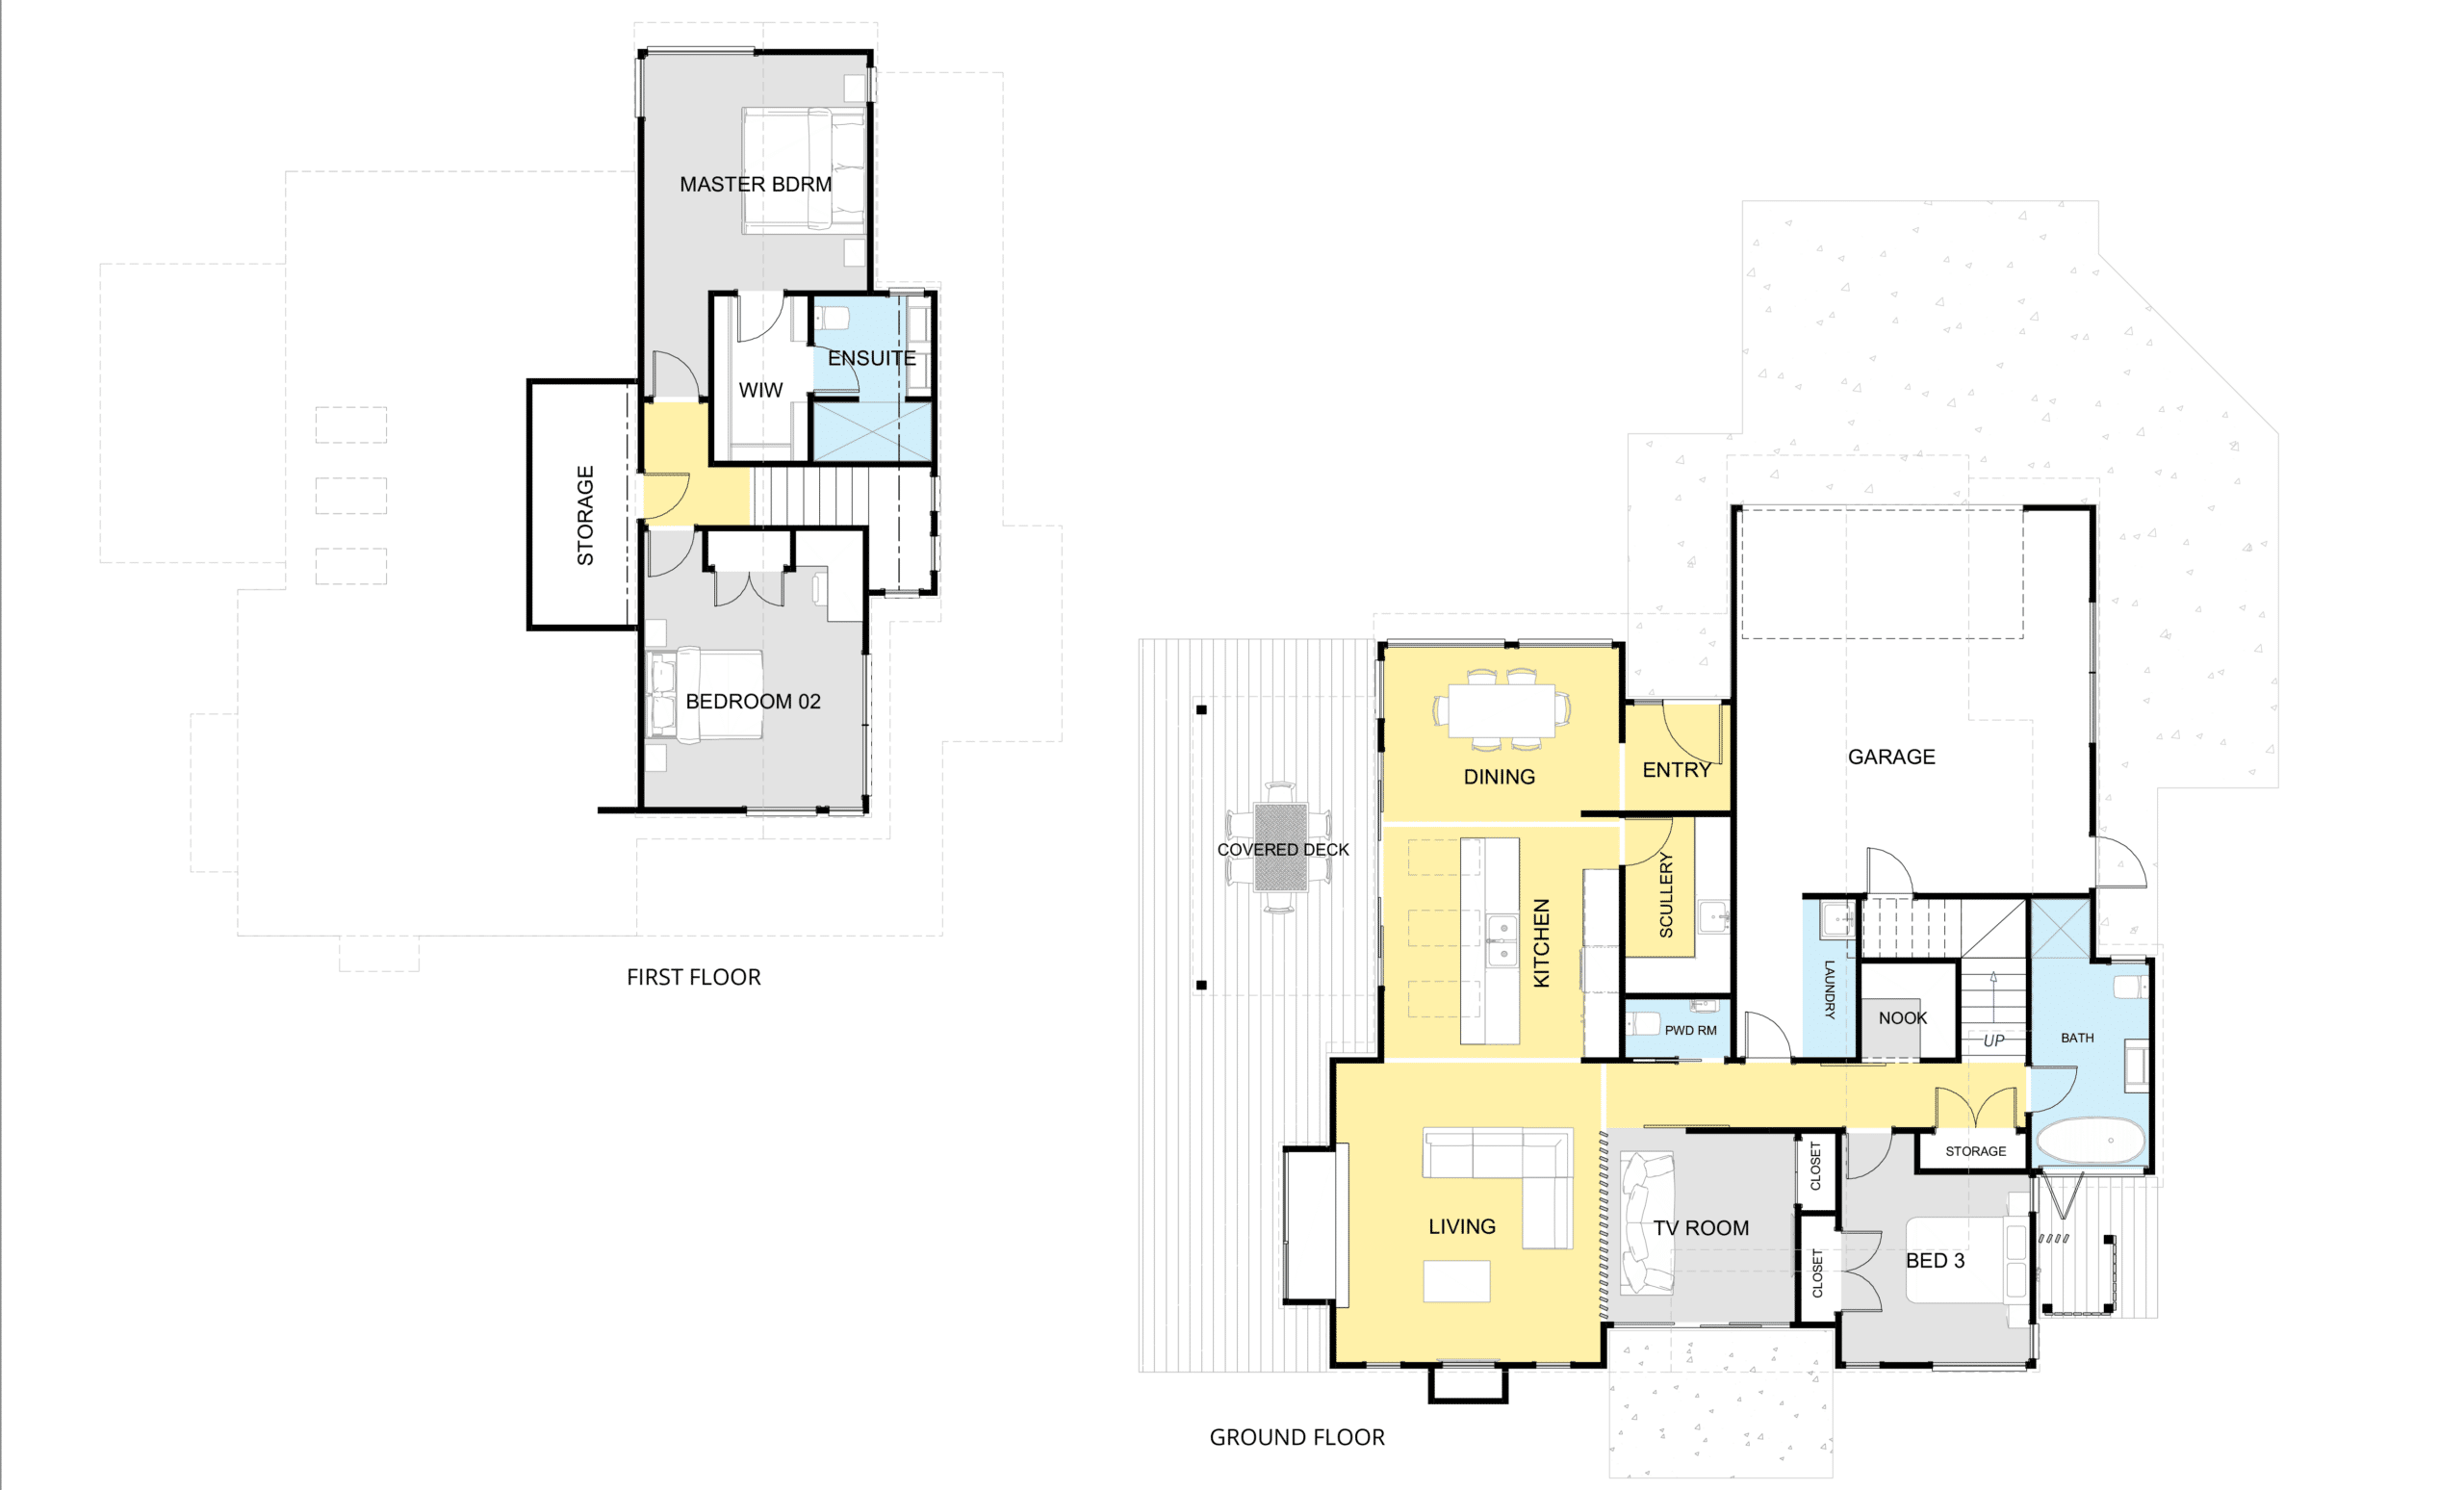 House plans